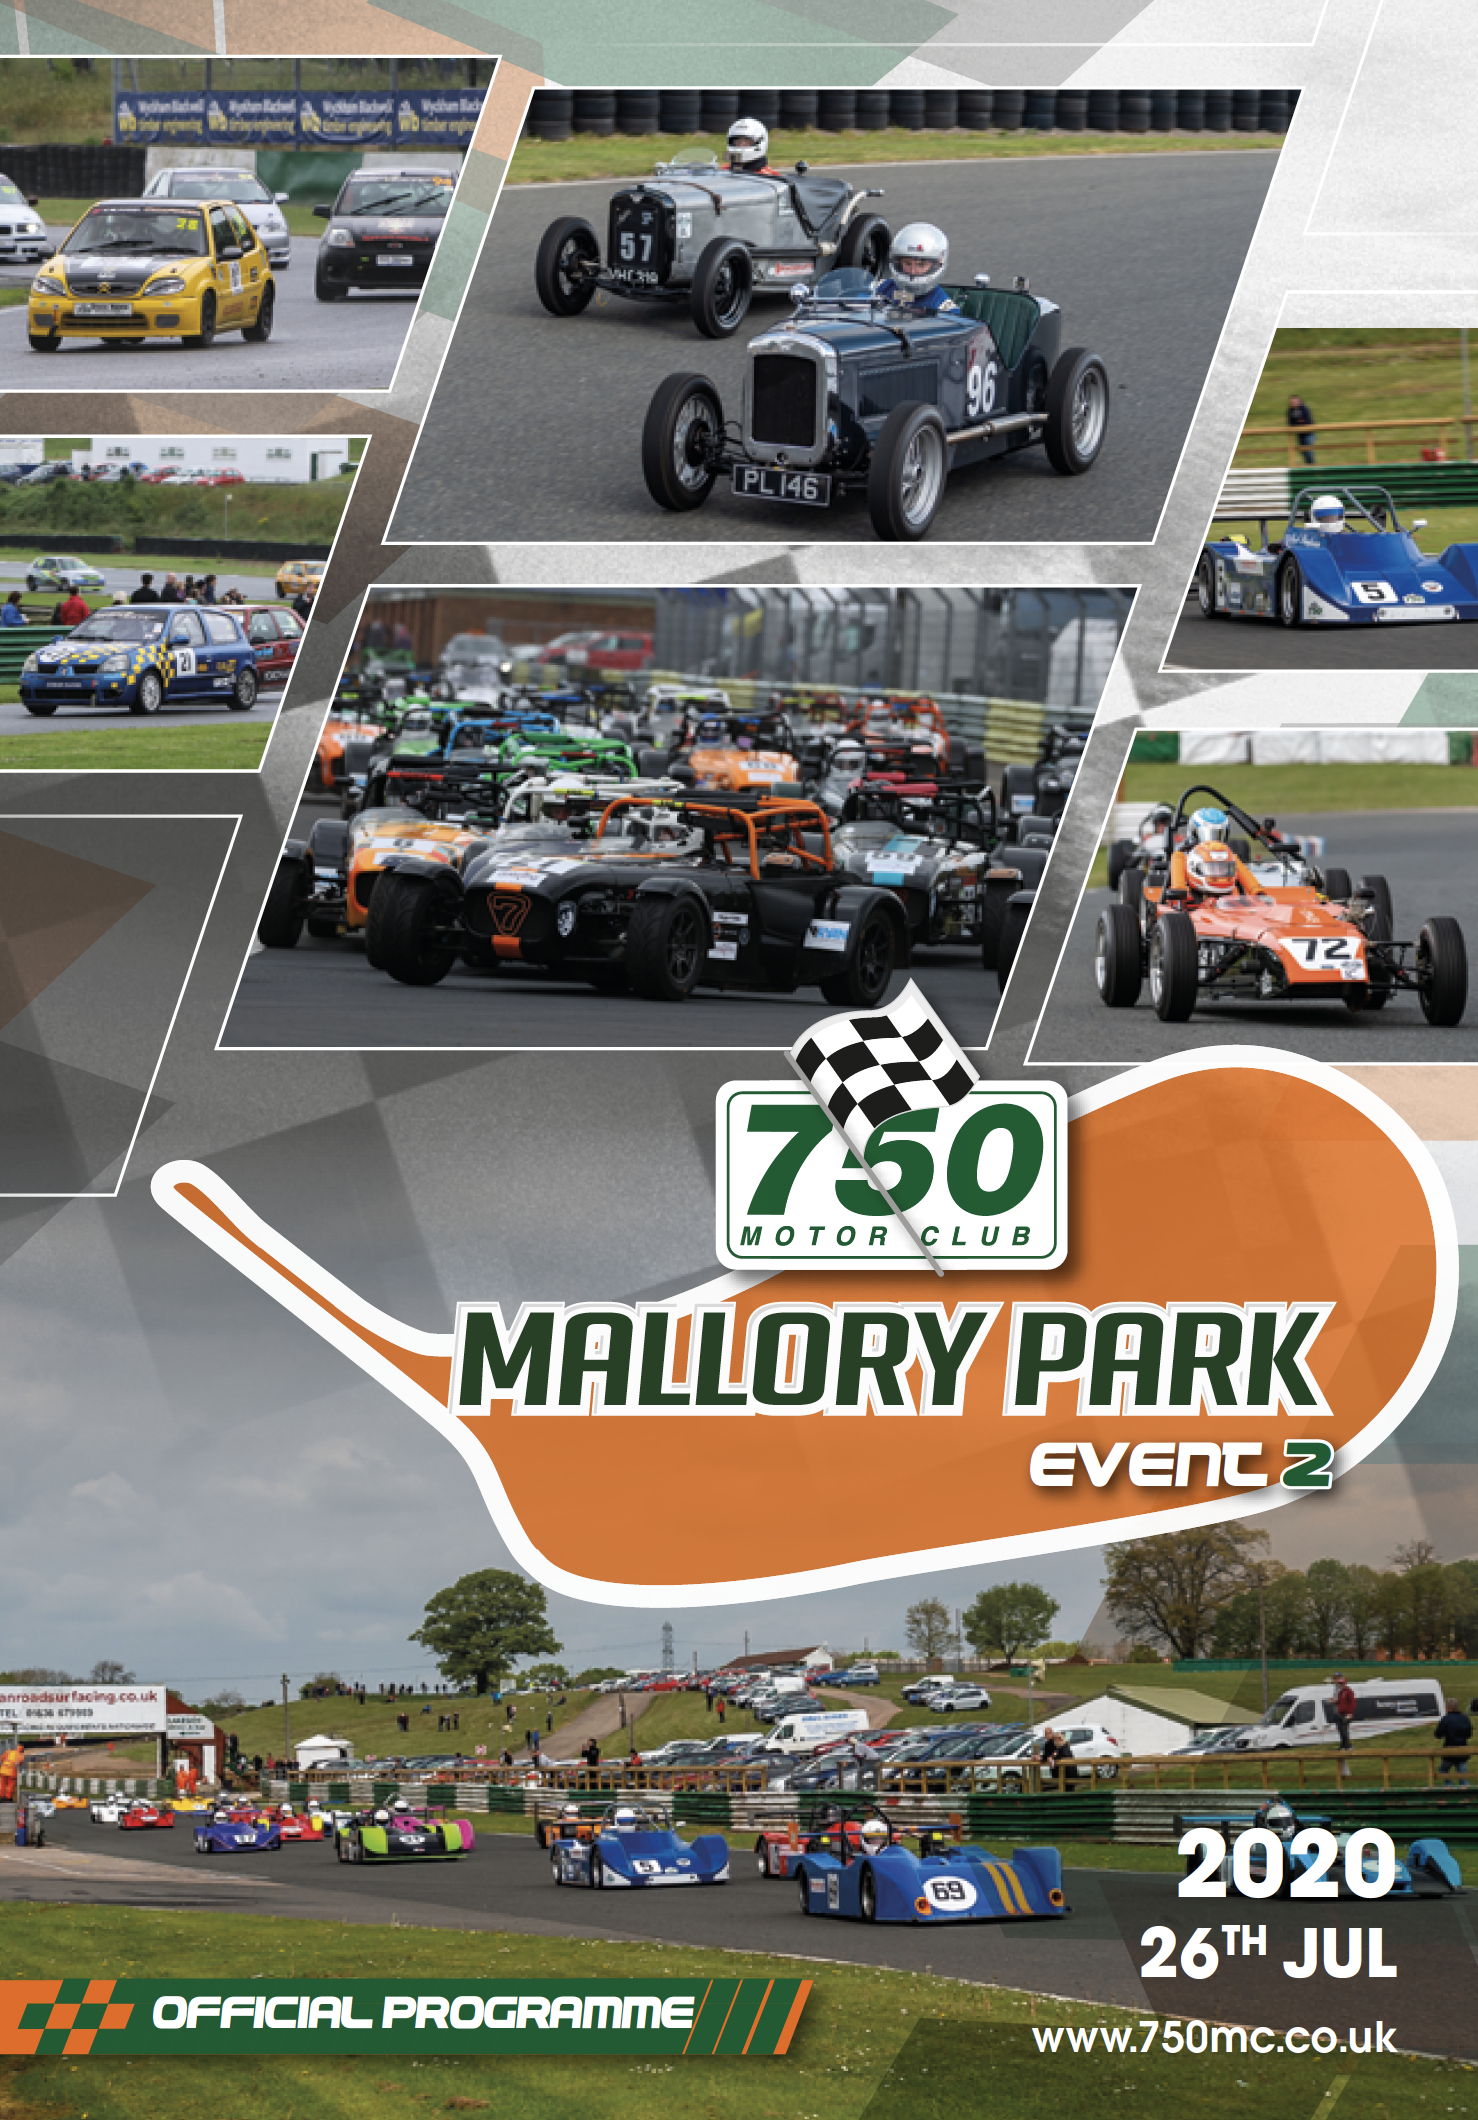 750 Motor Club Mallory Park programe